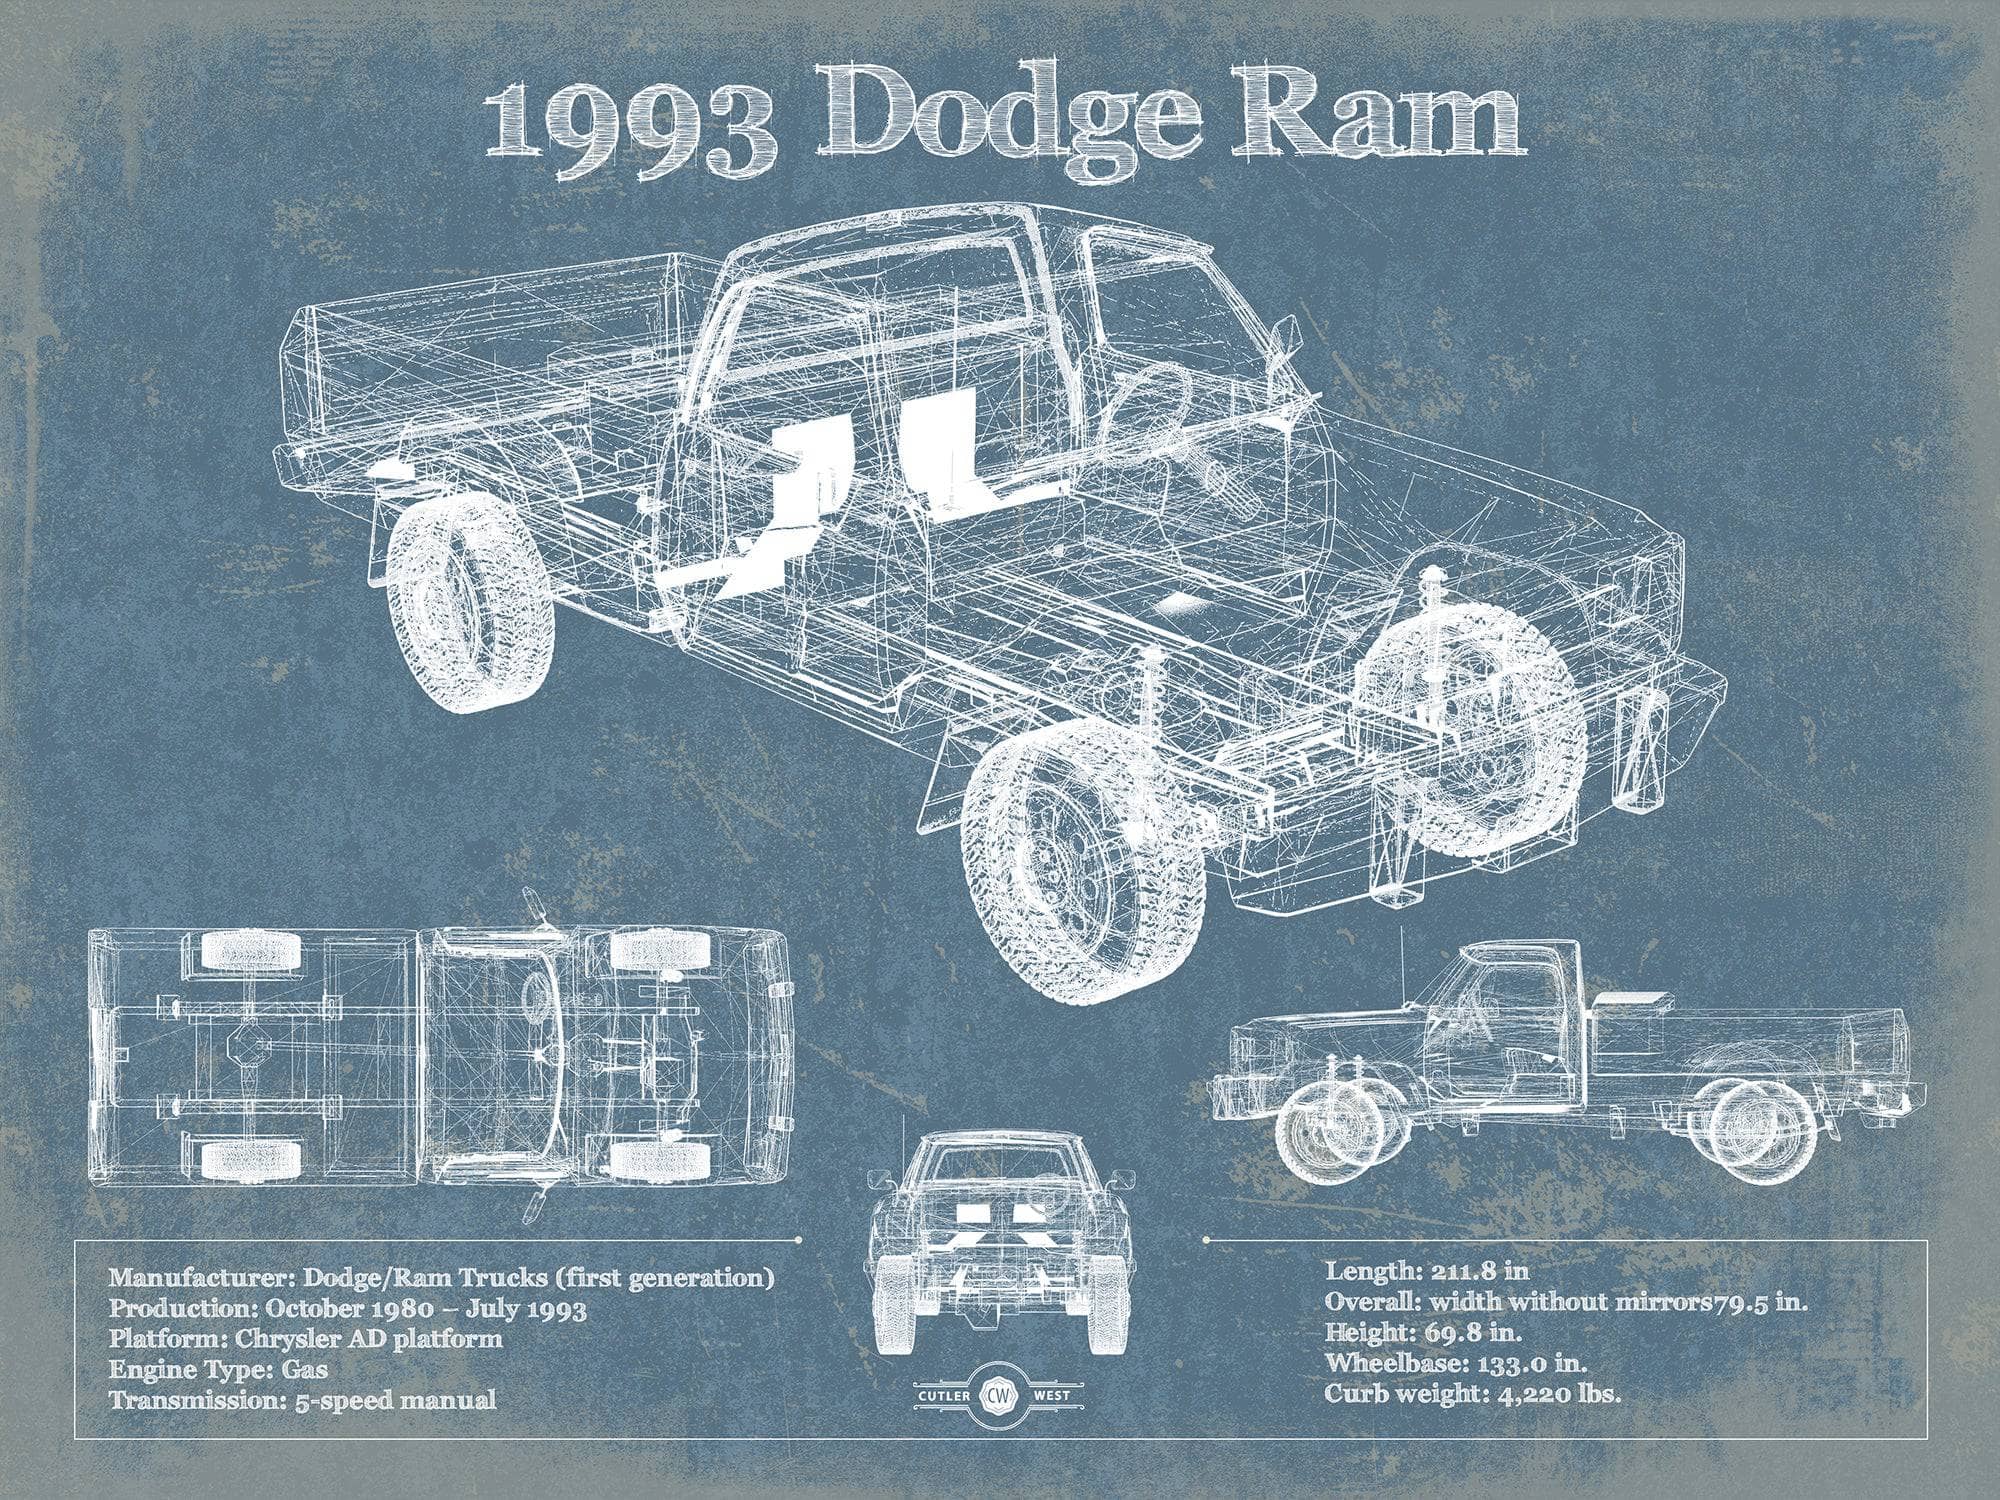 1993 Dodge RAM 150 Vintage Blueprint Auto Print